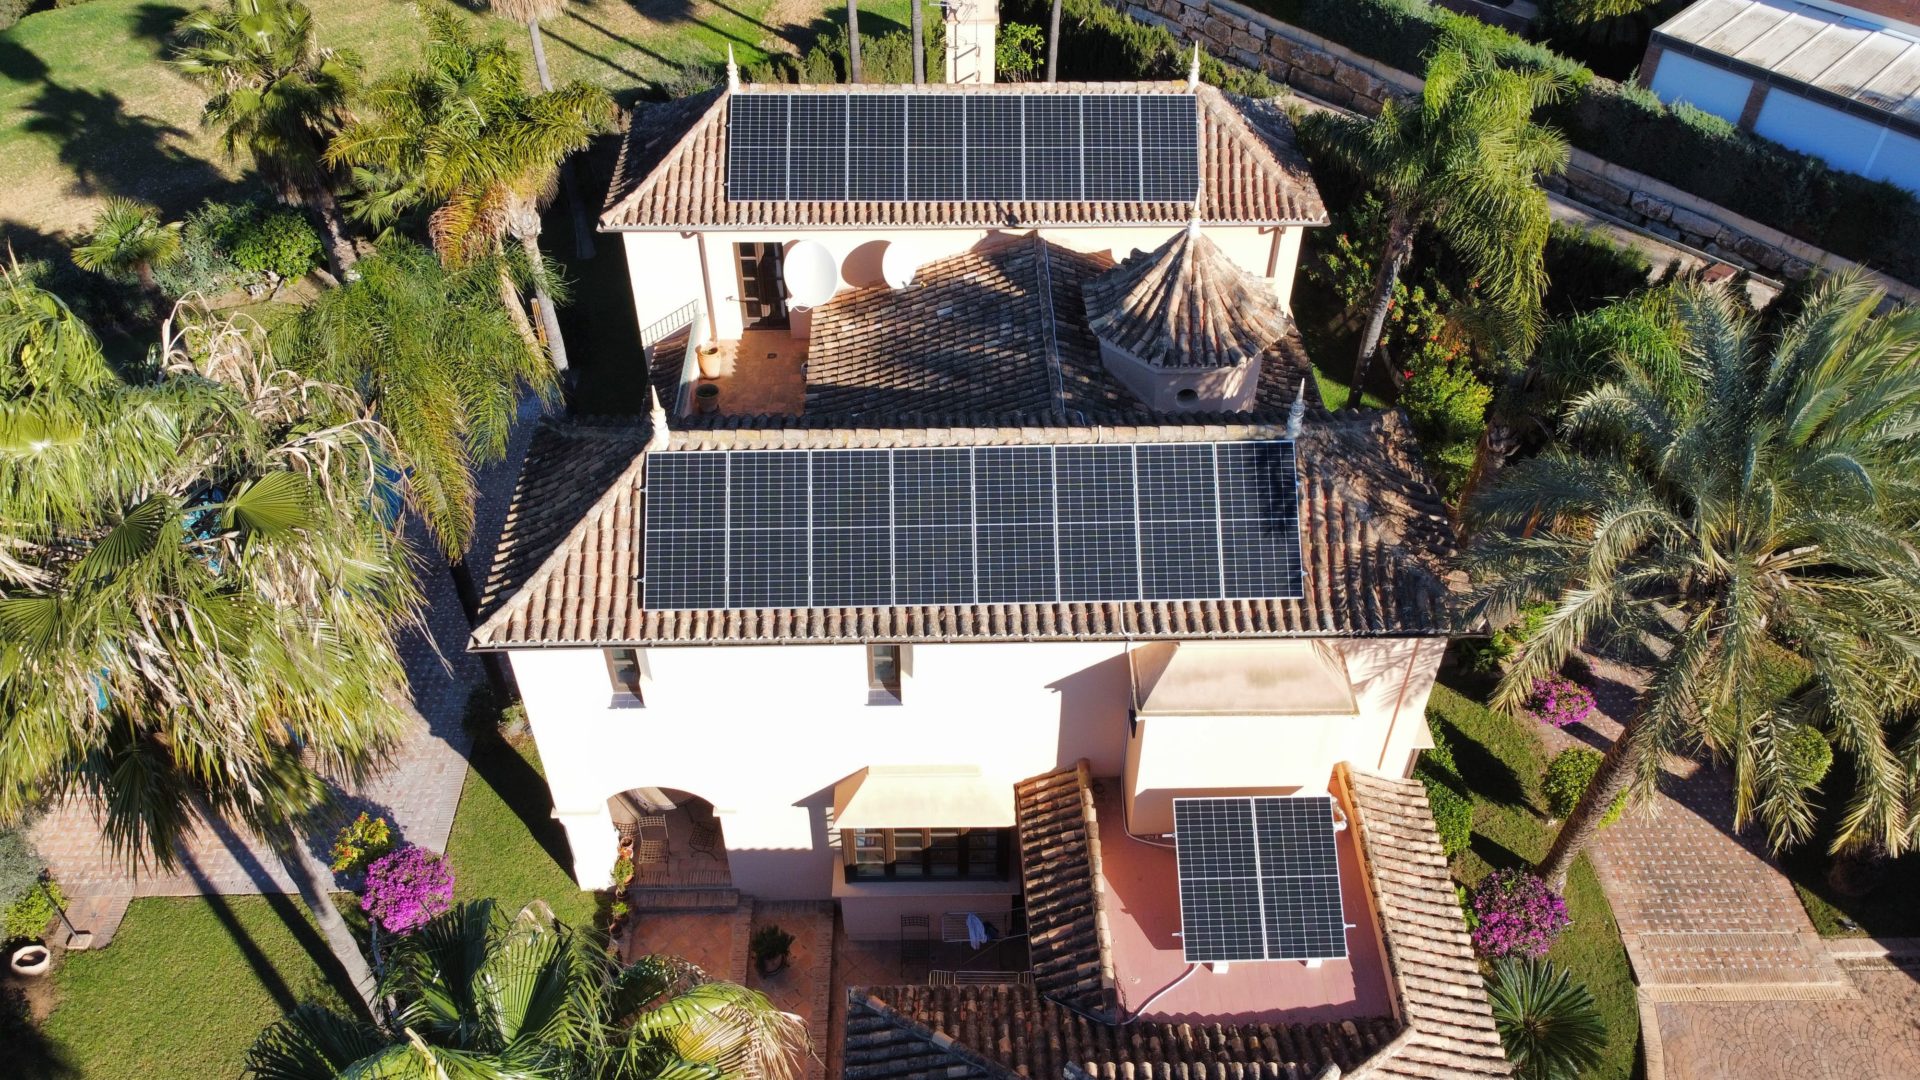 Instalacion fotovoltaica scaled